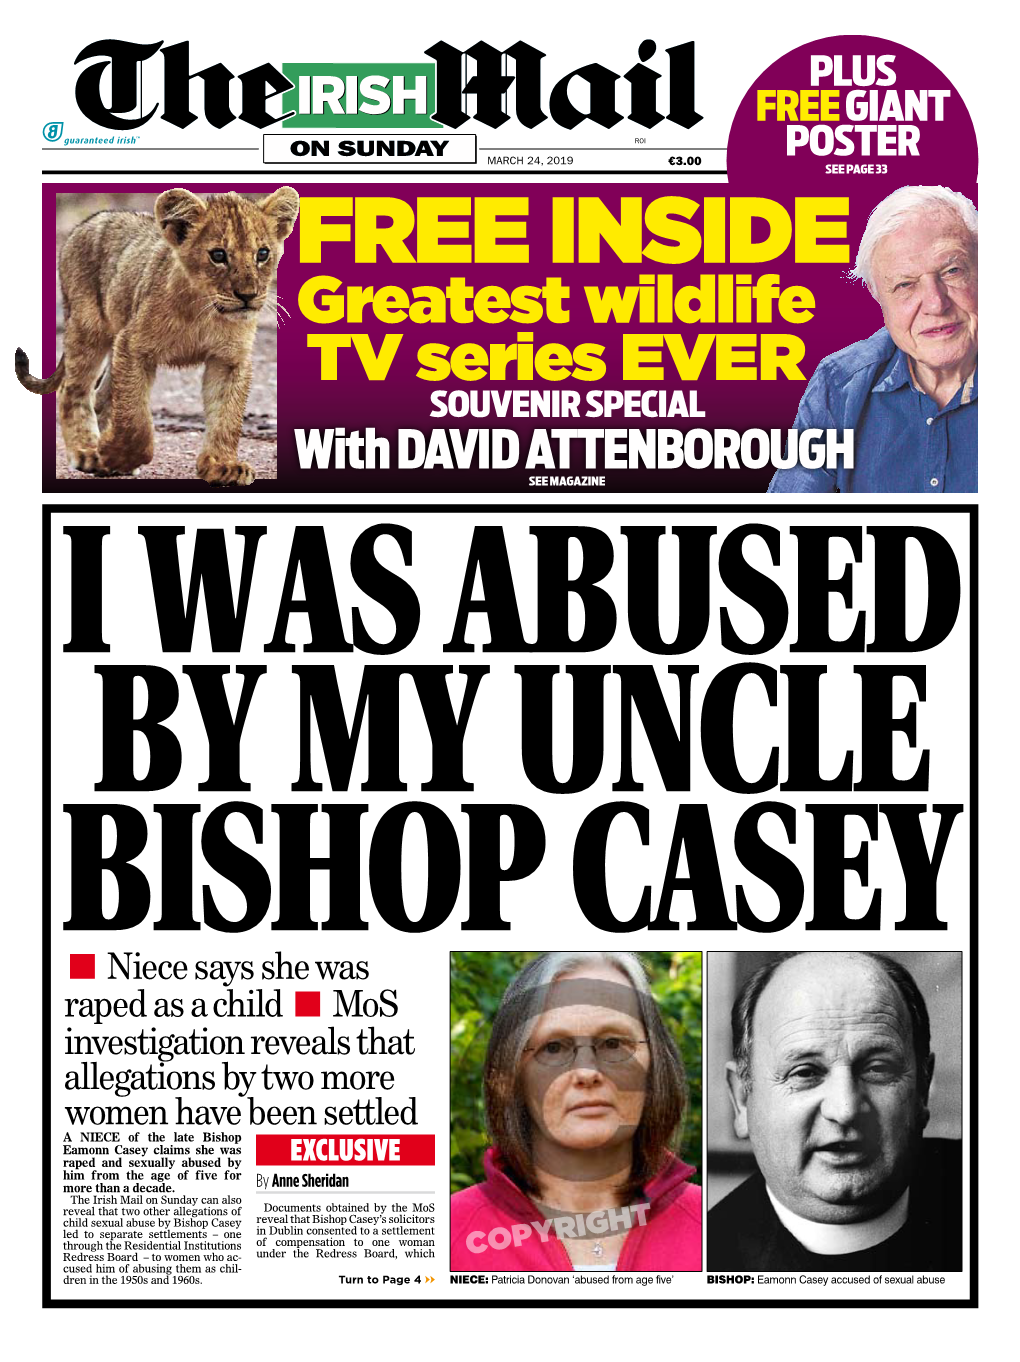 Bishop Casey Is